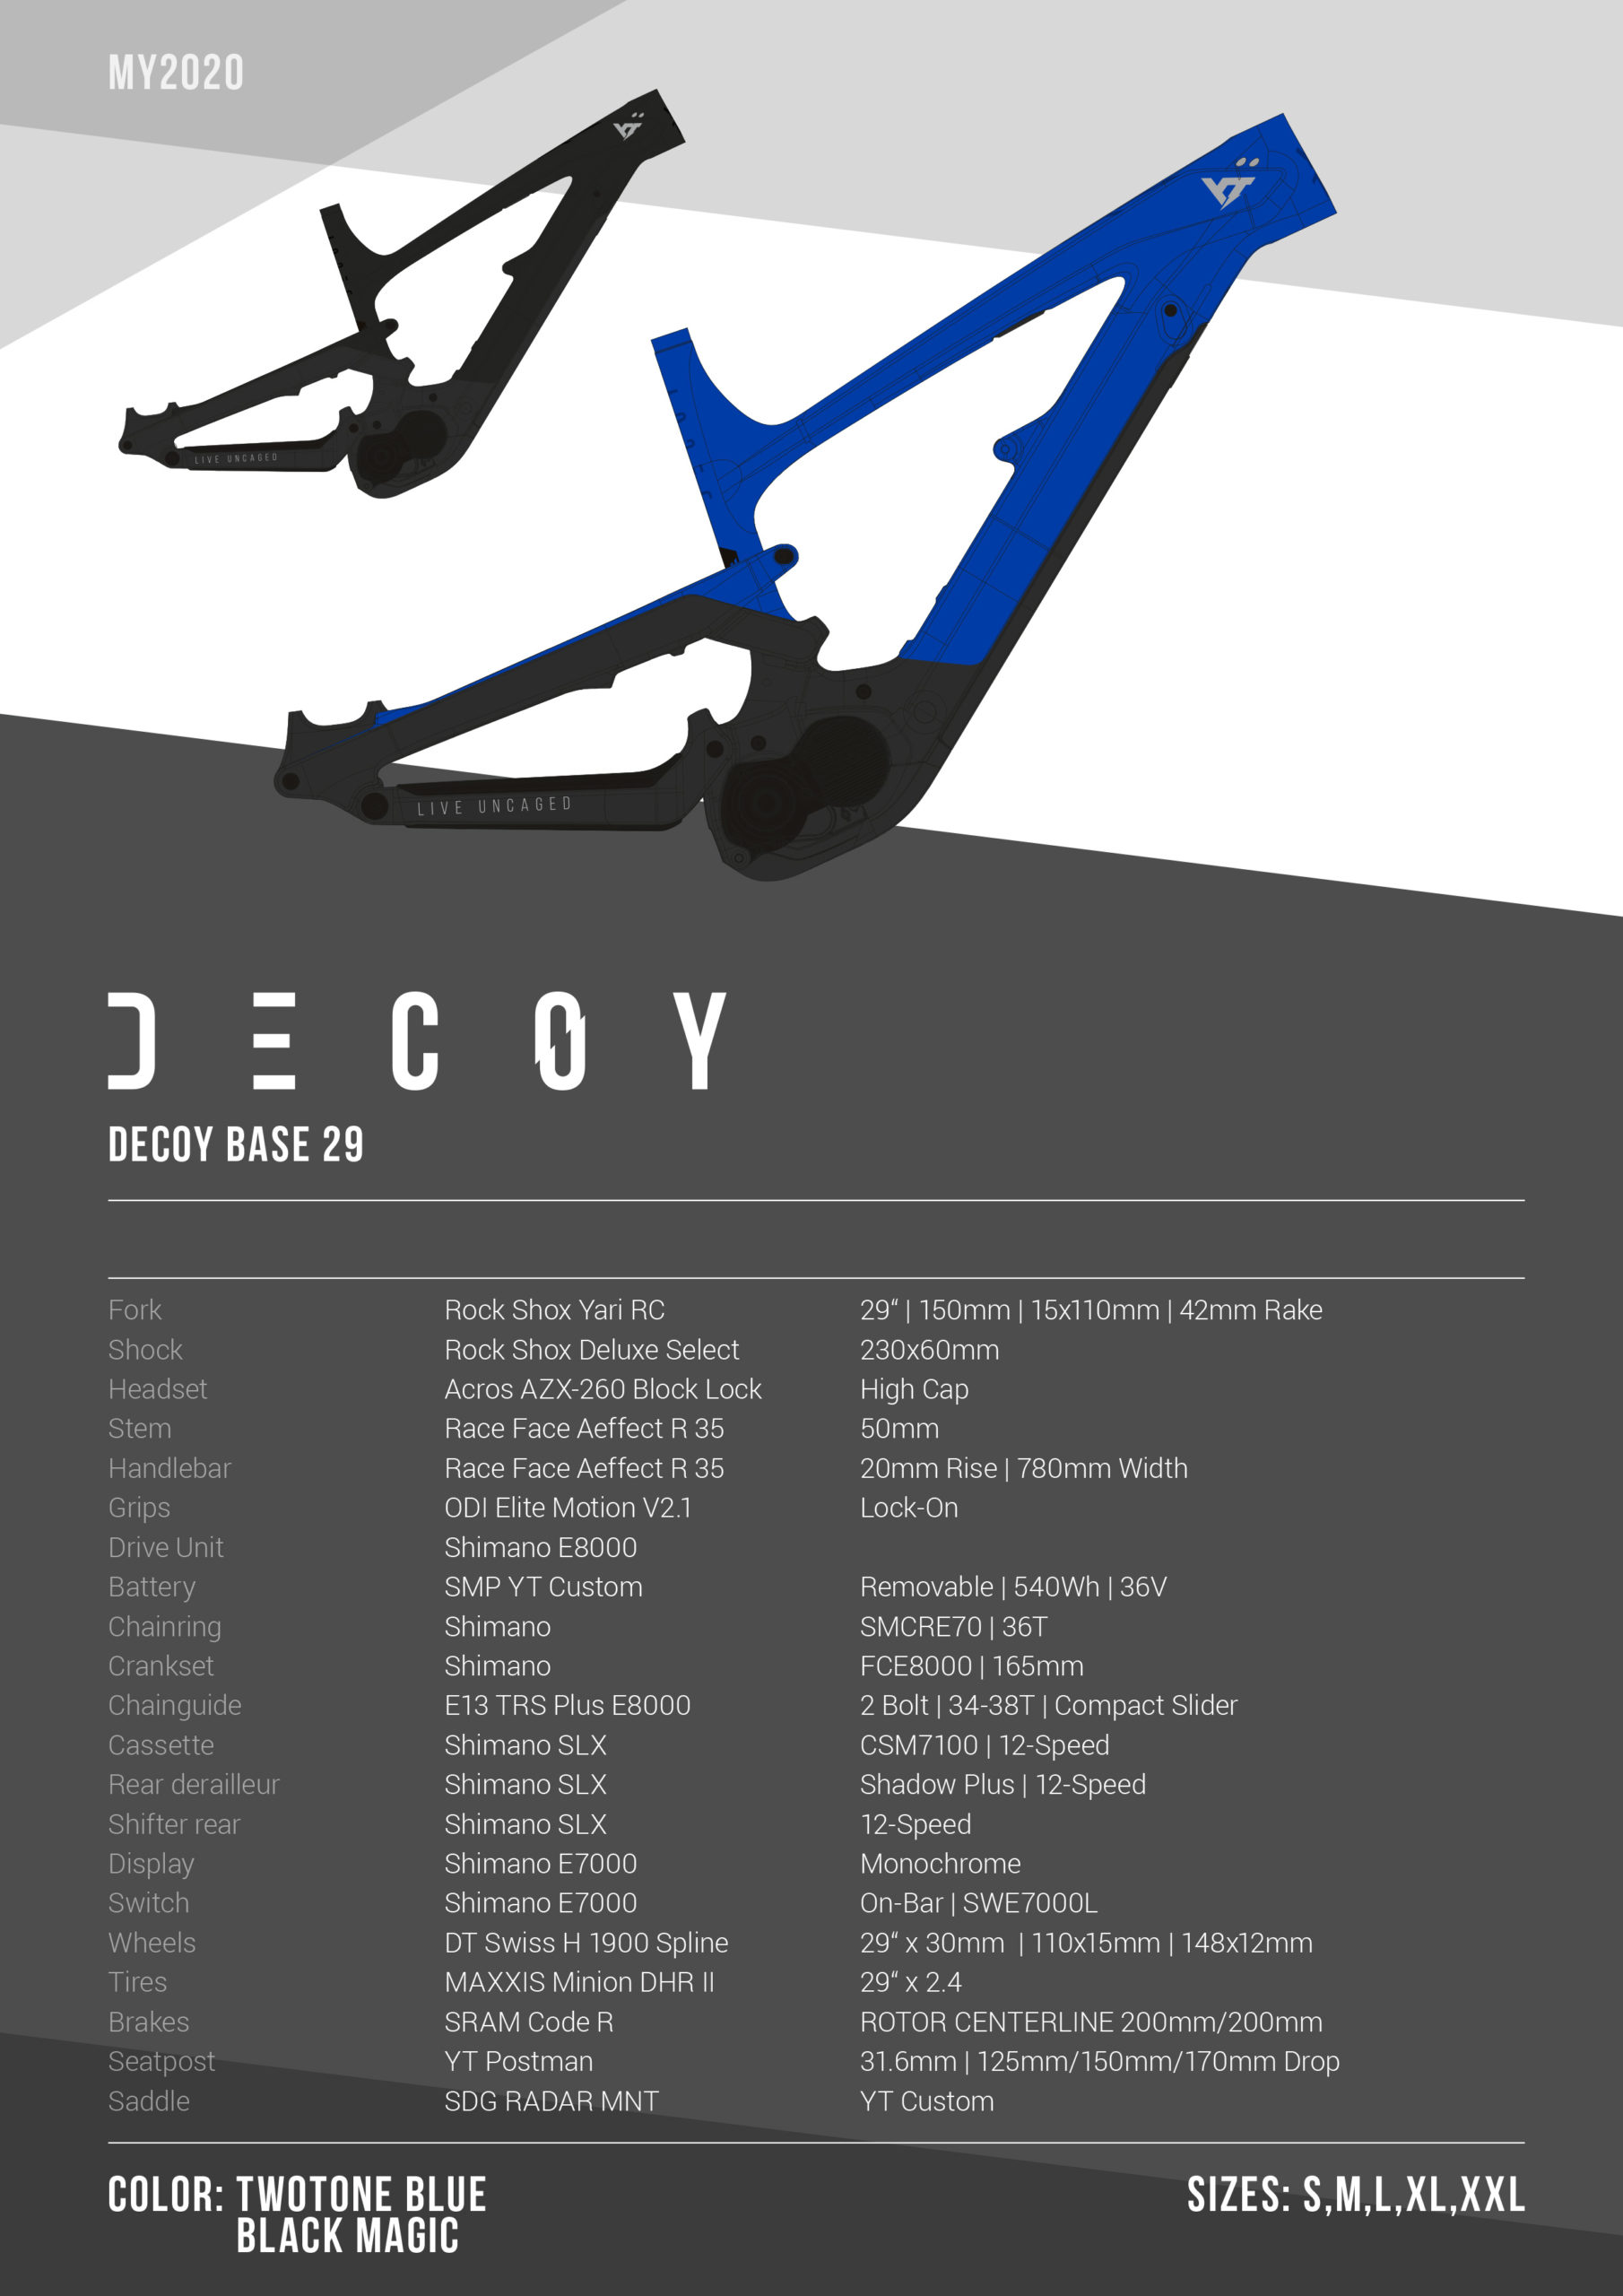 decoy base 29